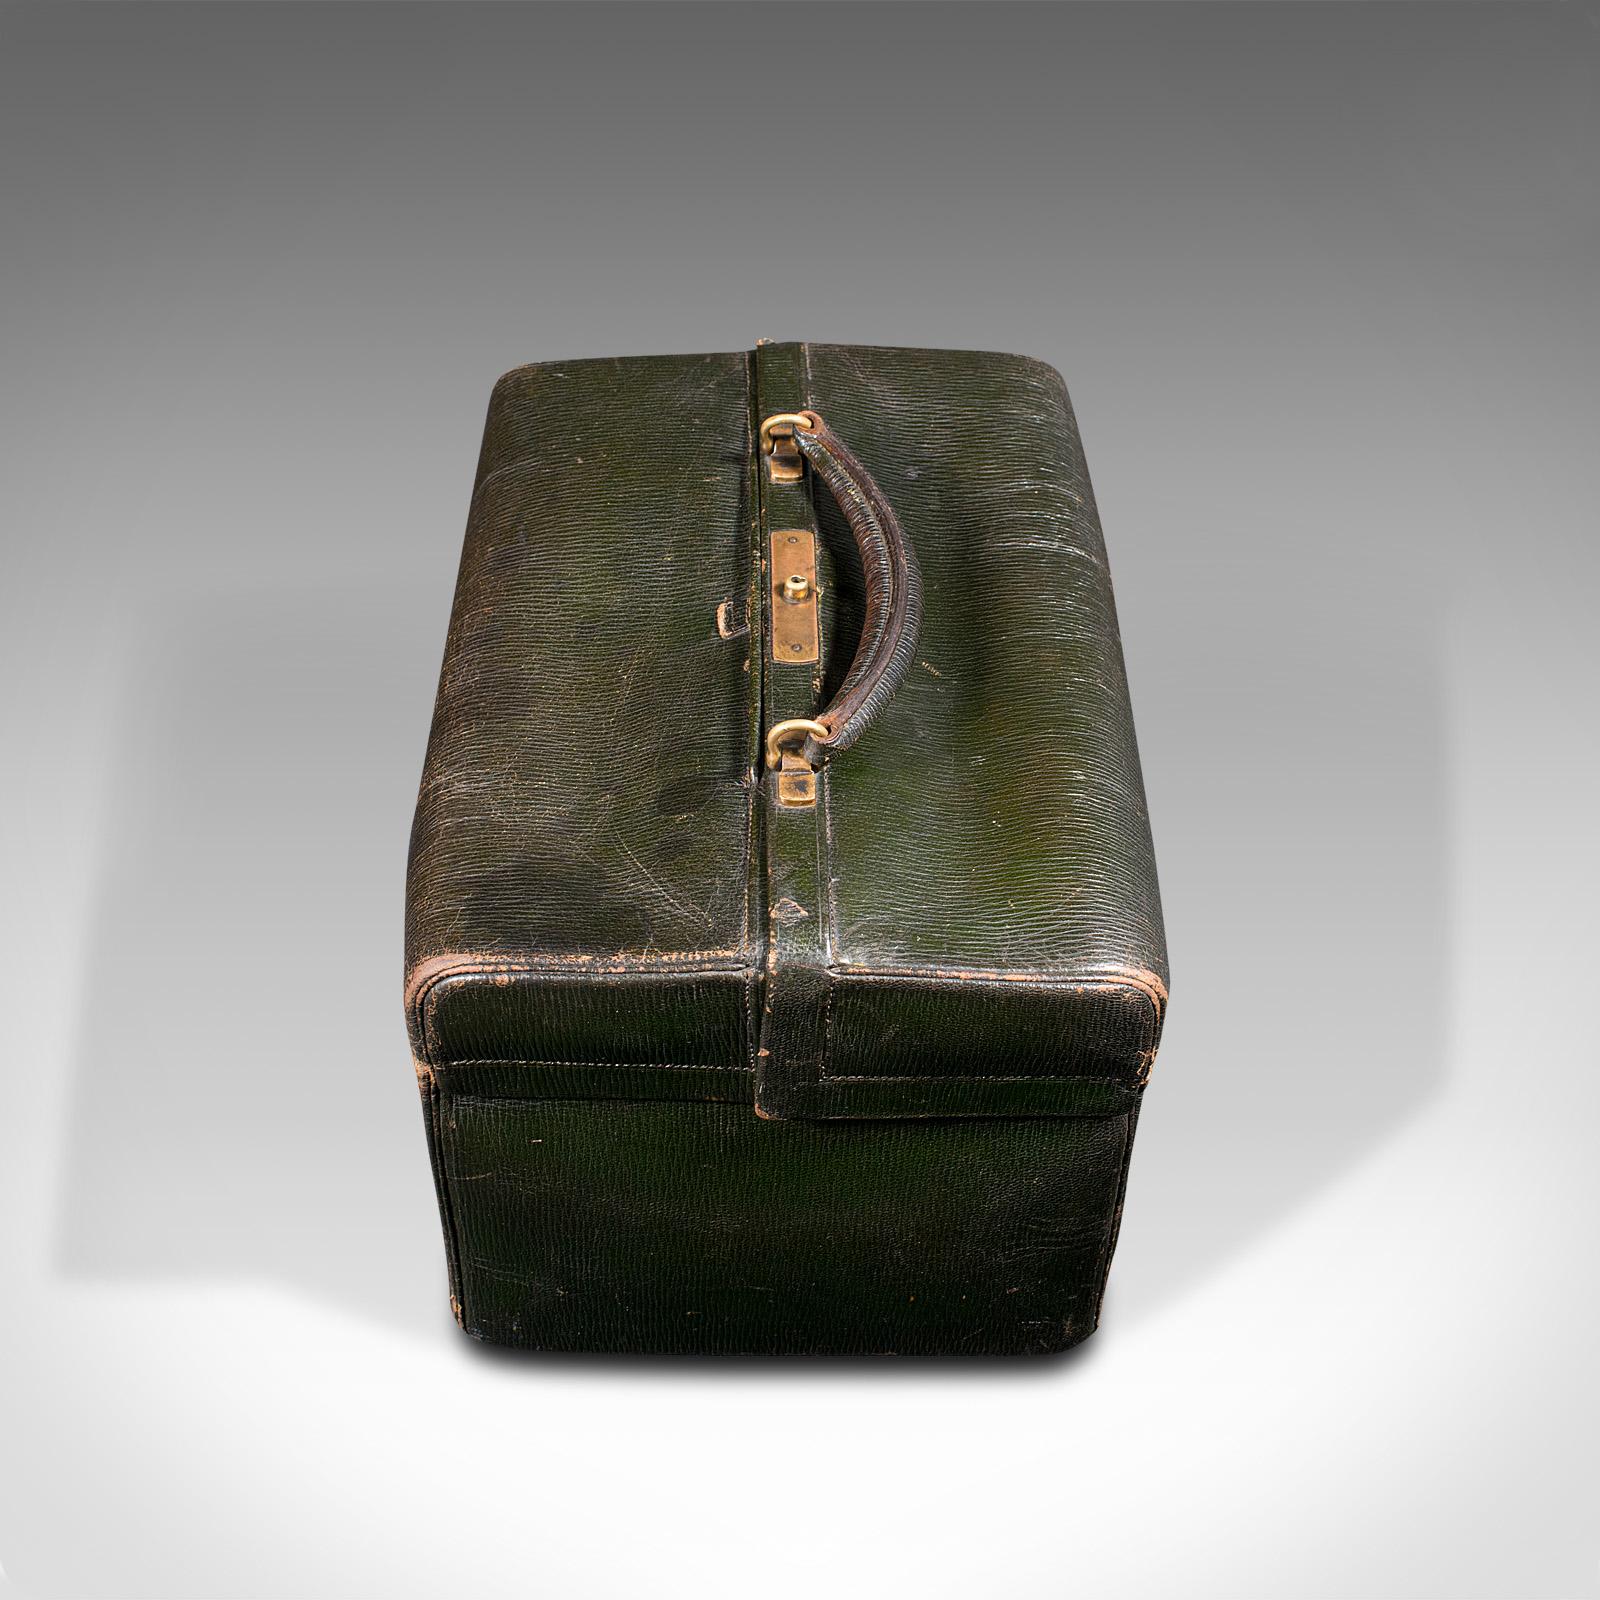 20th Century Antique Toiletry Case, English, Leather, Vanity Bag, Harrods, London, Edwardian